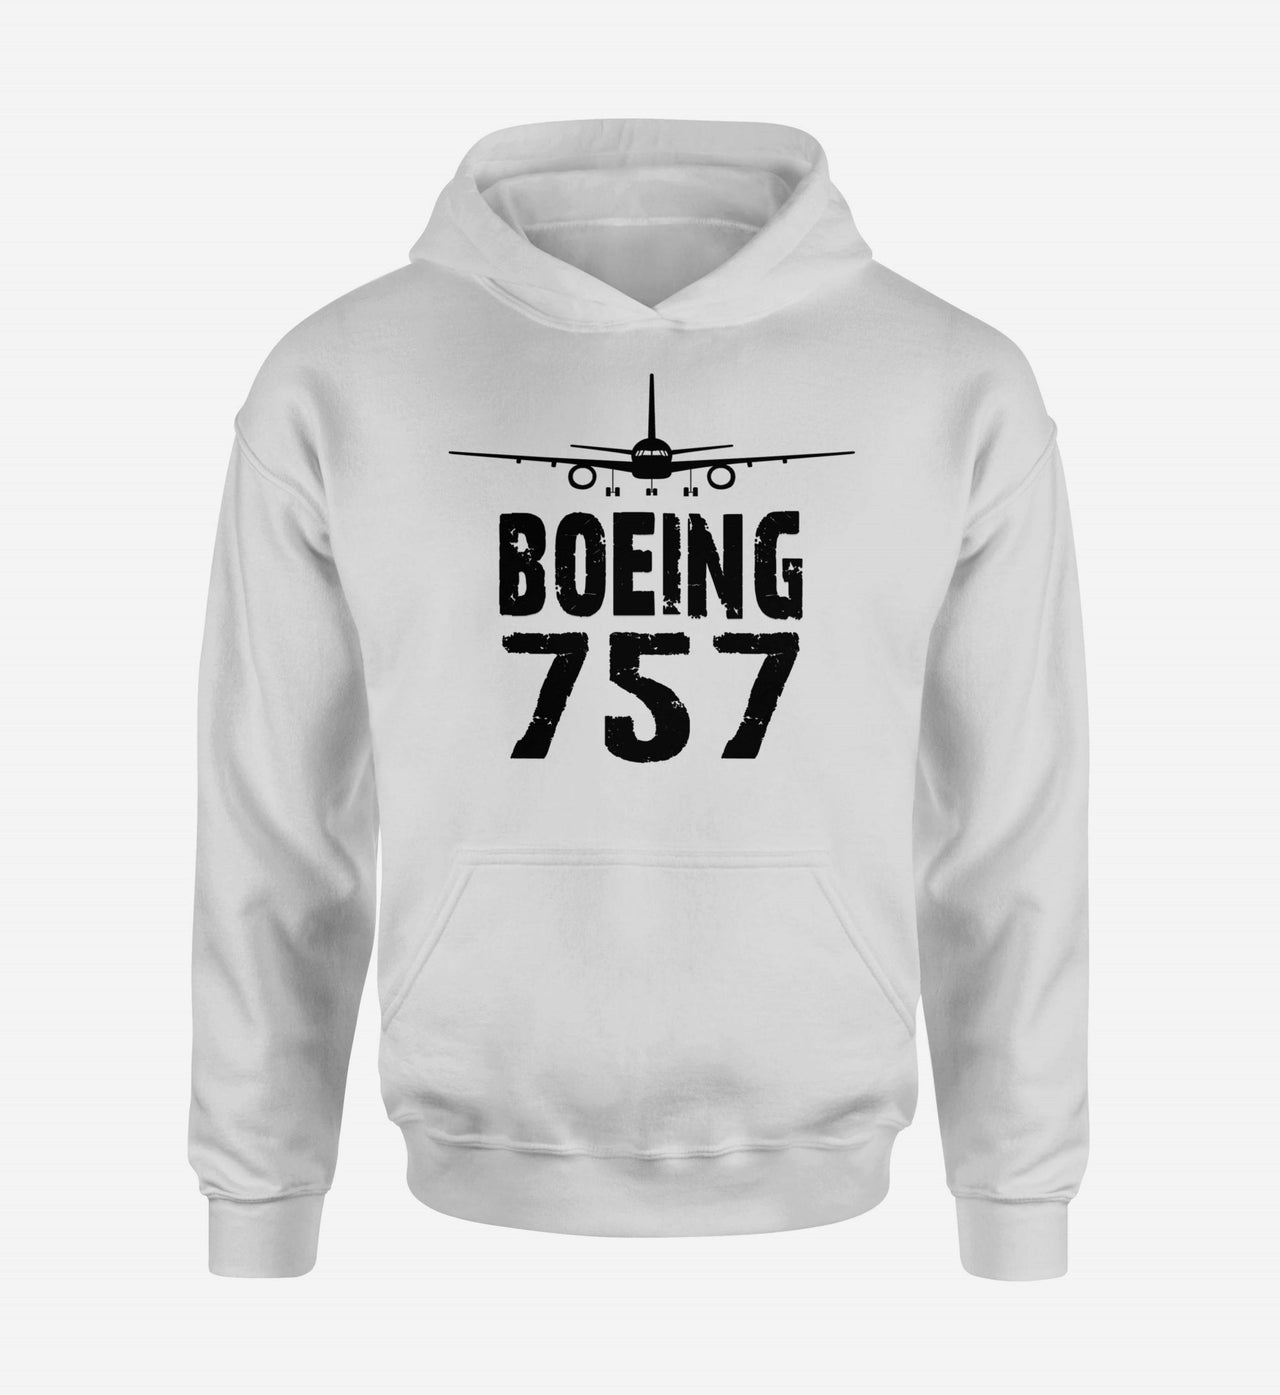 Boeing 757 & Plane Designed Hoodies